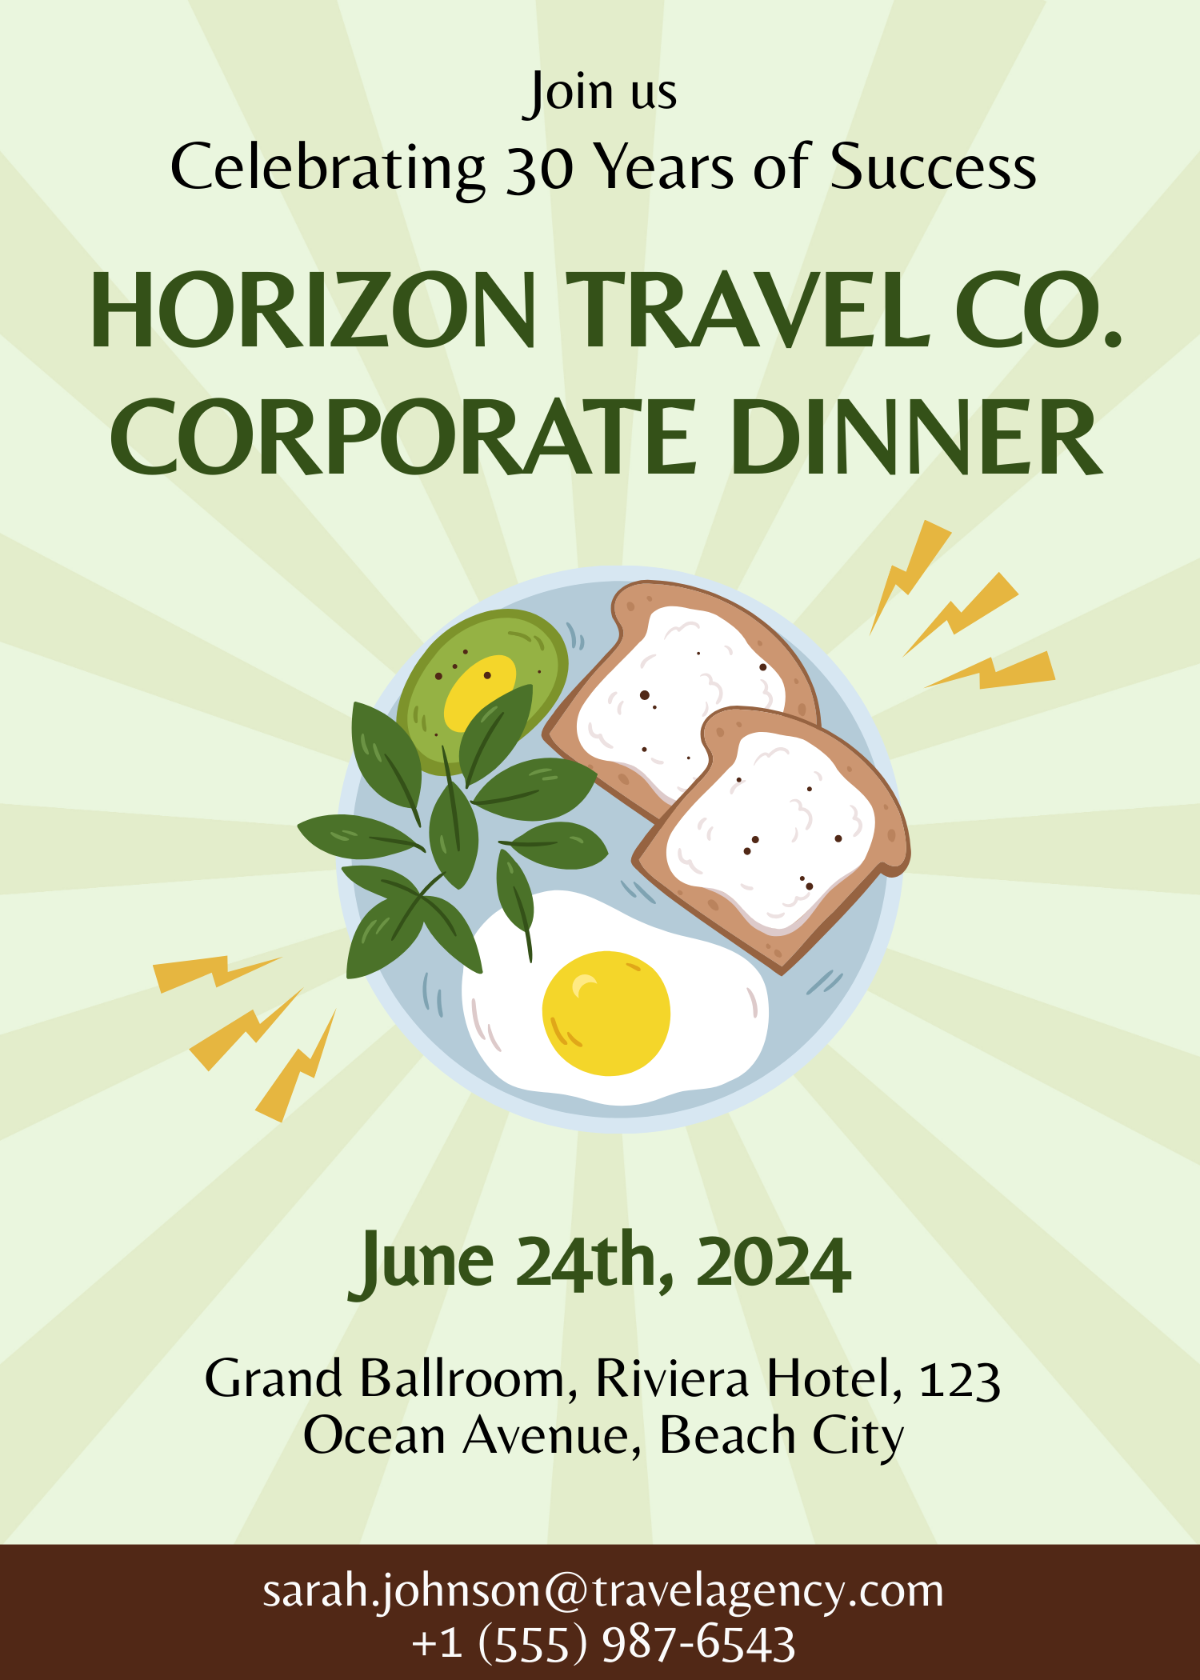 Travel Agency Corporate Dinner Invitation Template